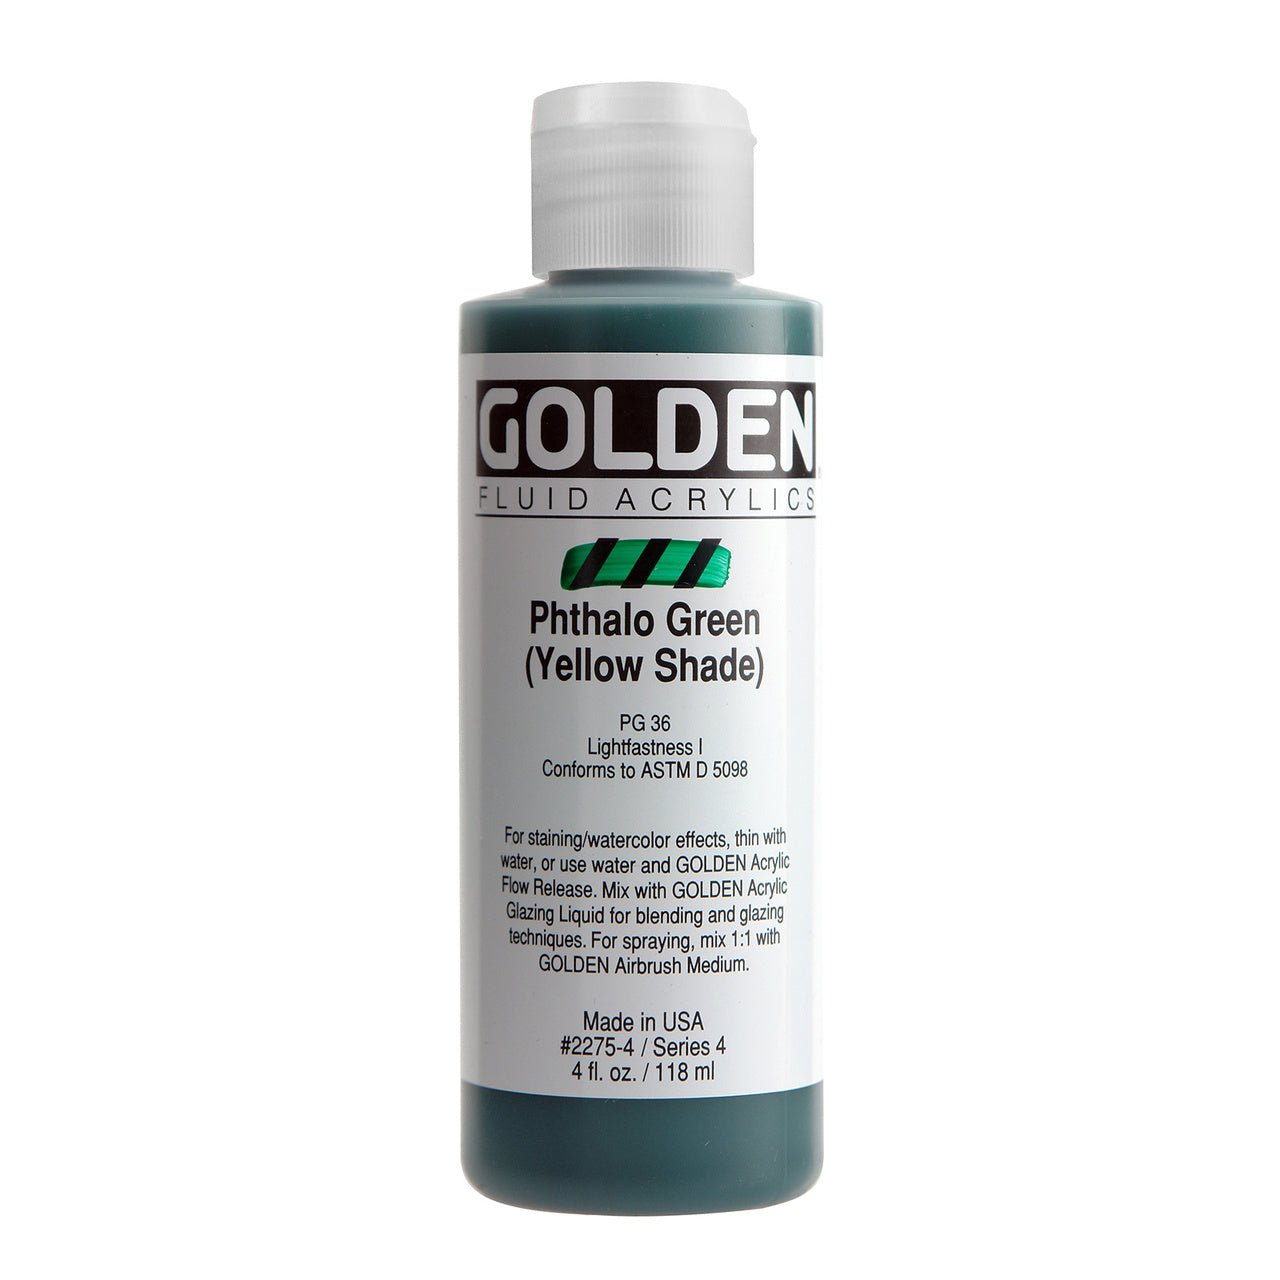 Golden Fluid Acrylic Phthalo Green (yellow shade) 4 oz - merriartist.com